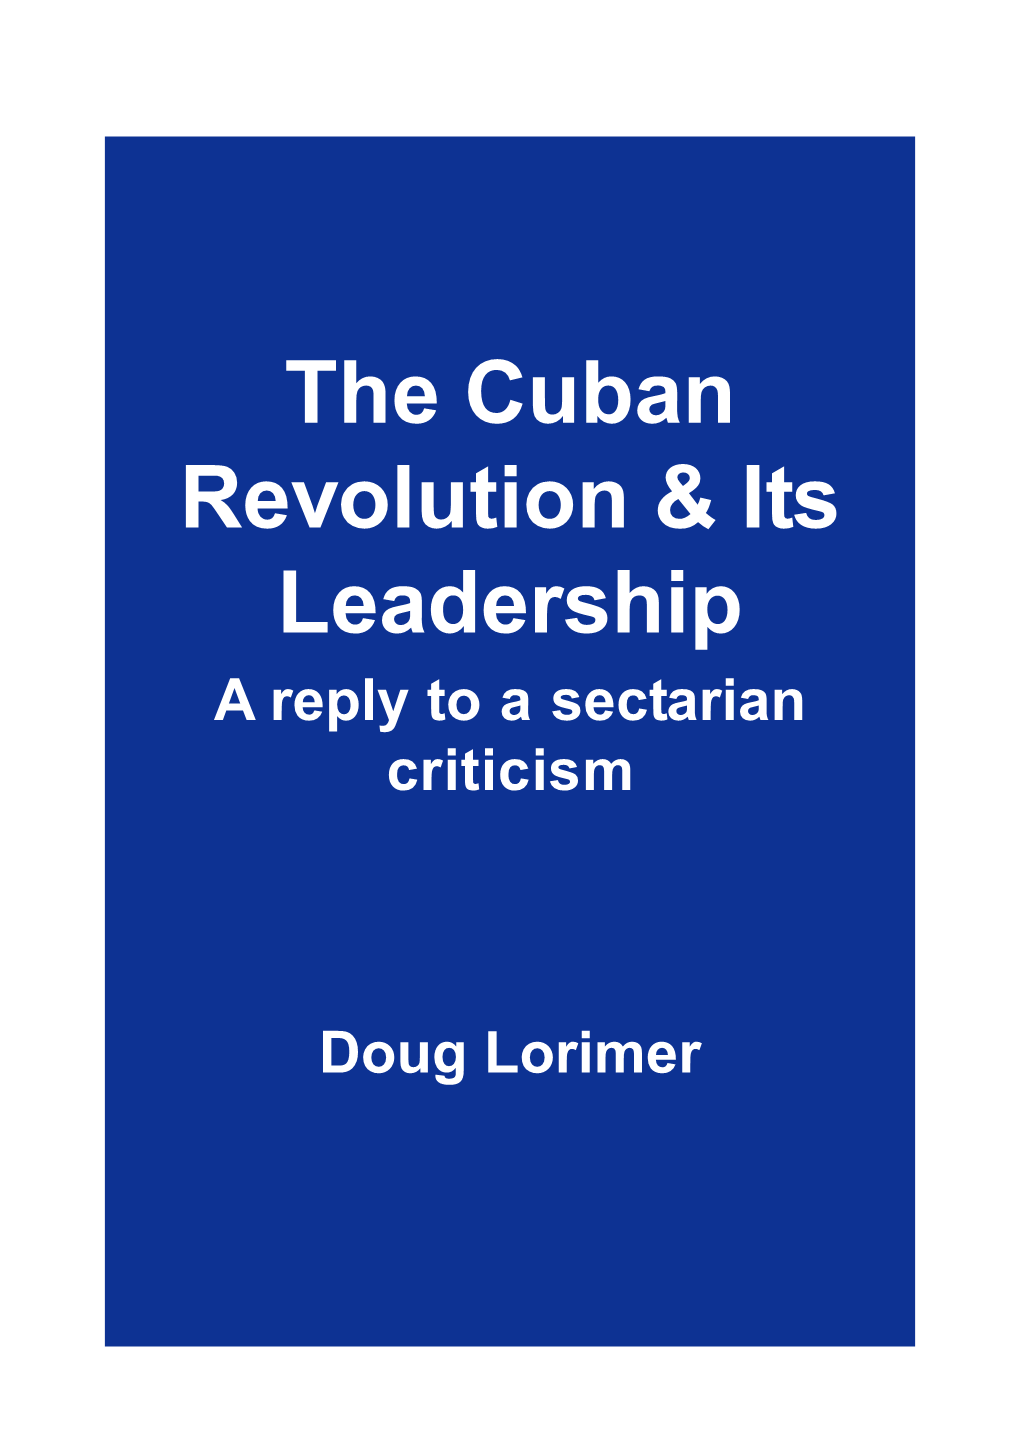 The Cuban Revolution & Its Leadership